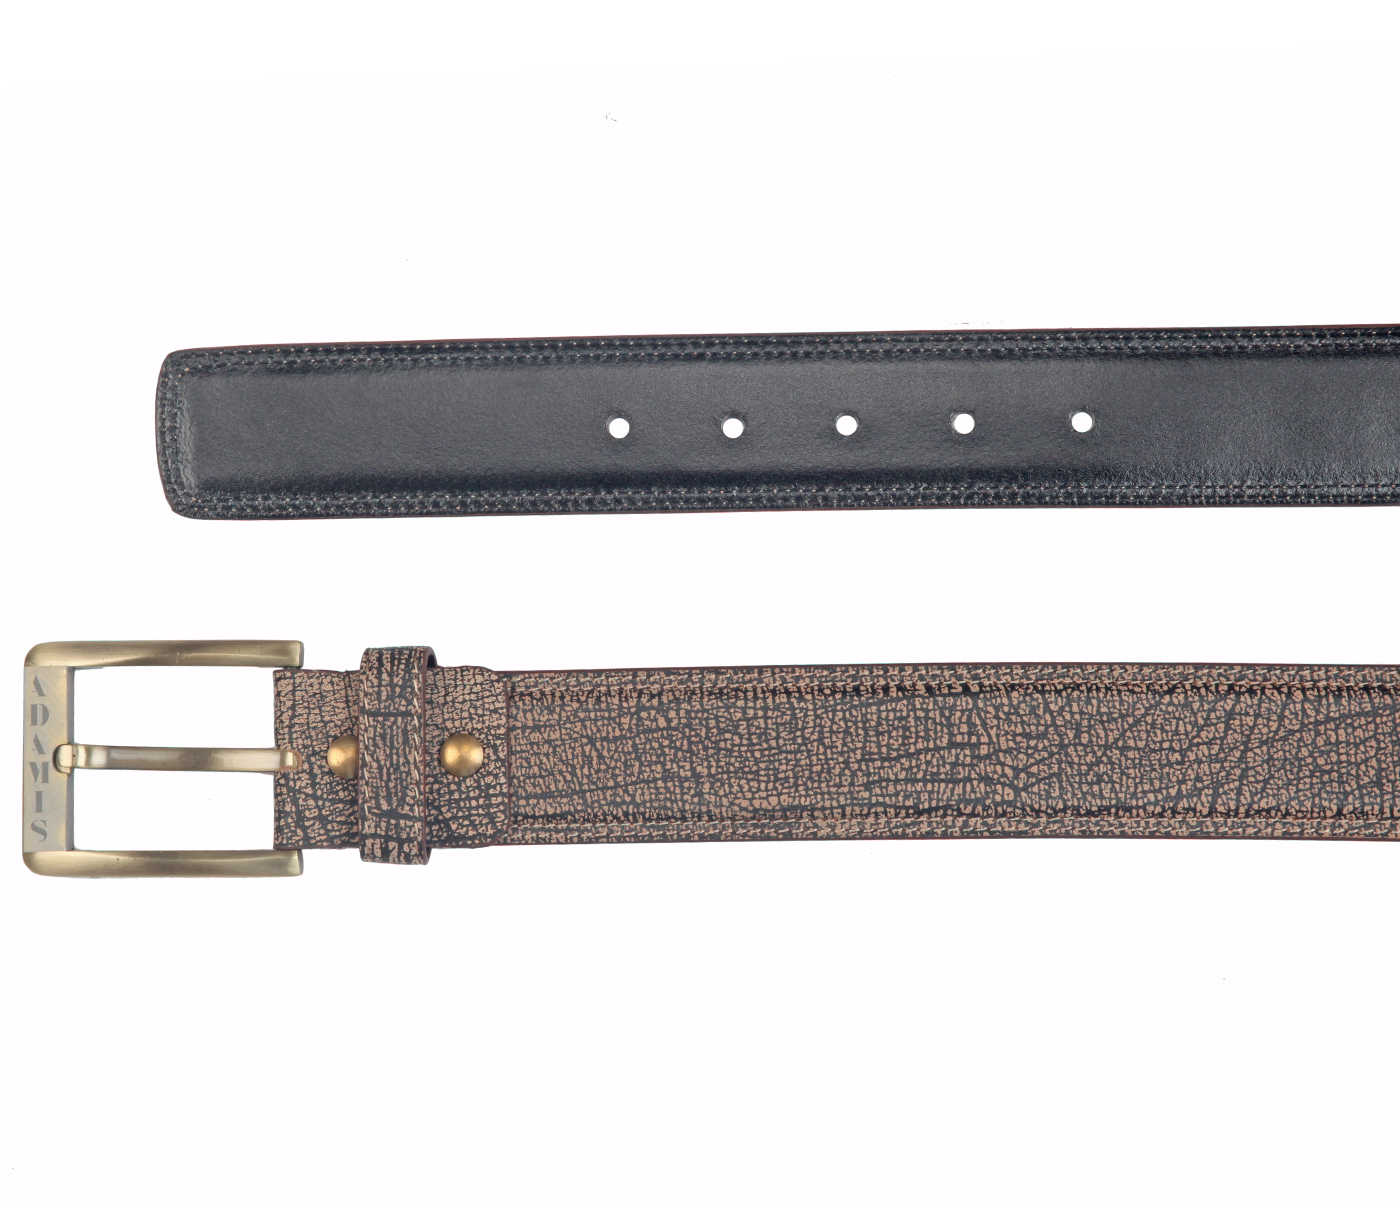 BL169--Men's stylish Casual wear belt in Genuine Leather - Brown.